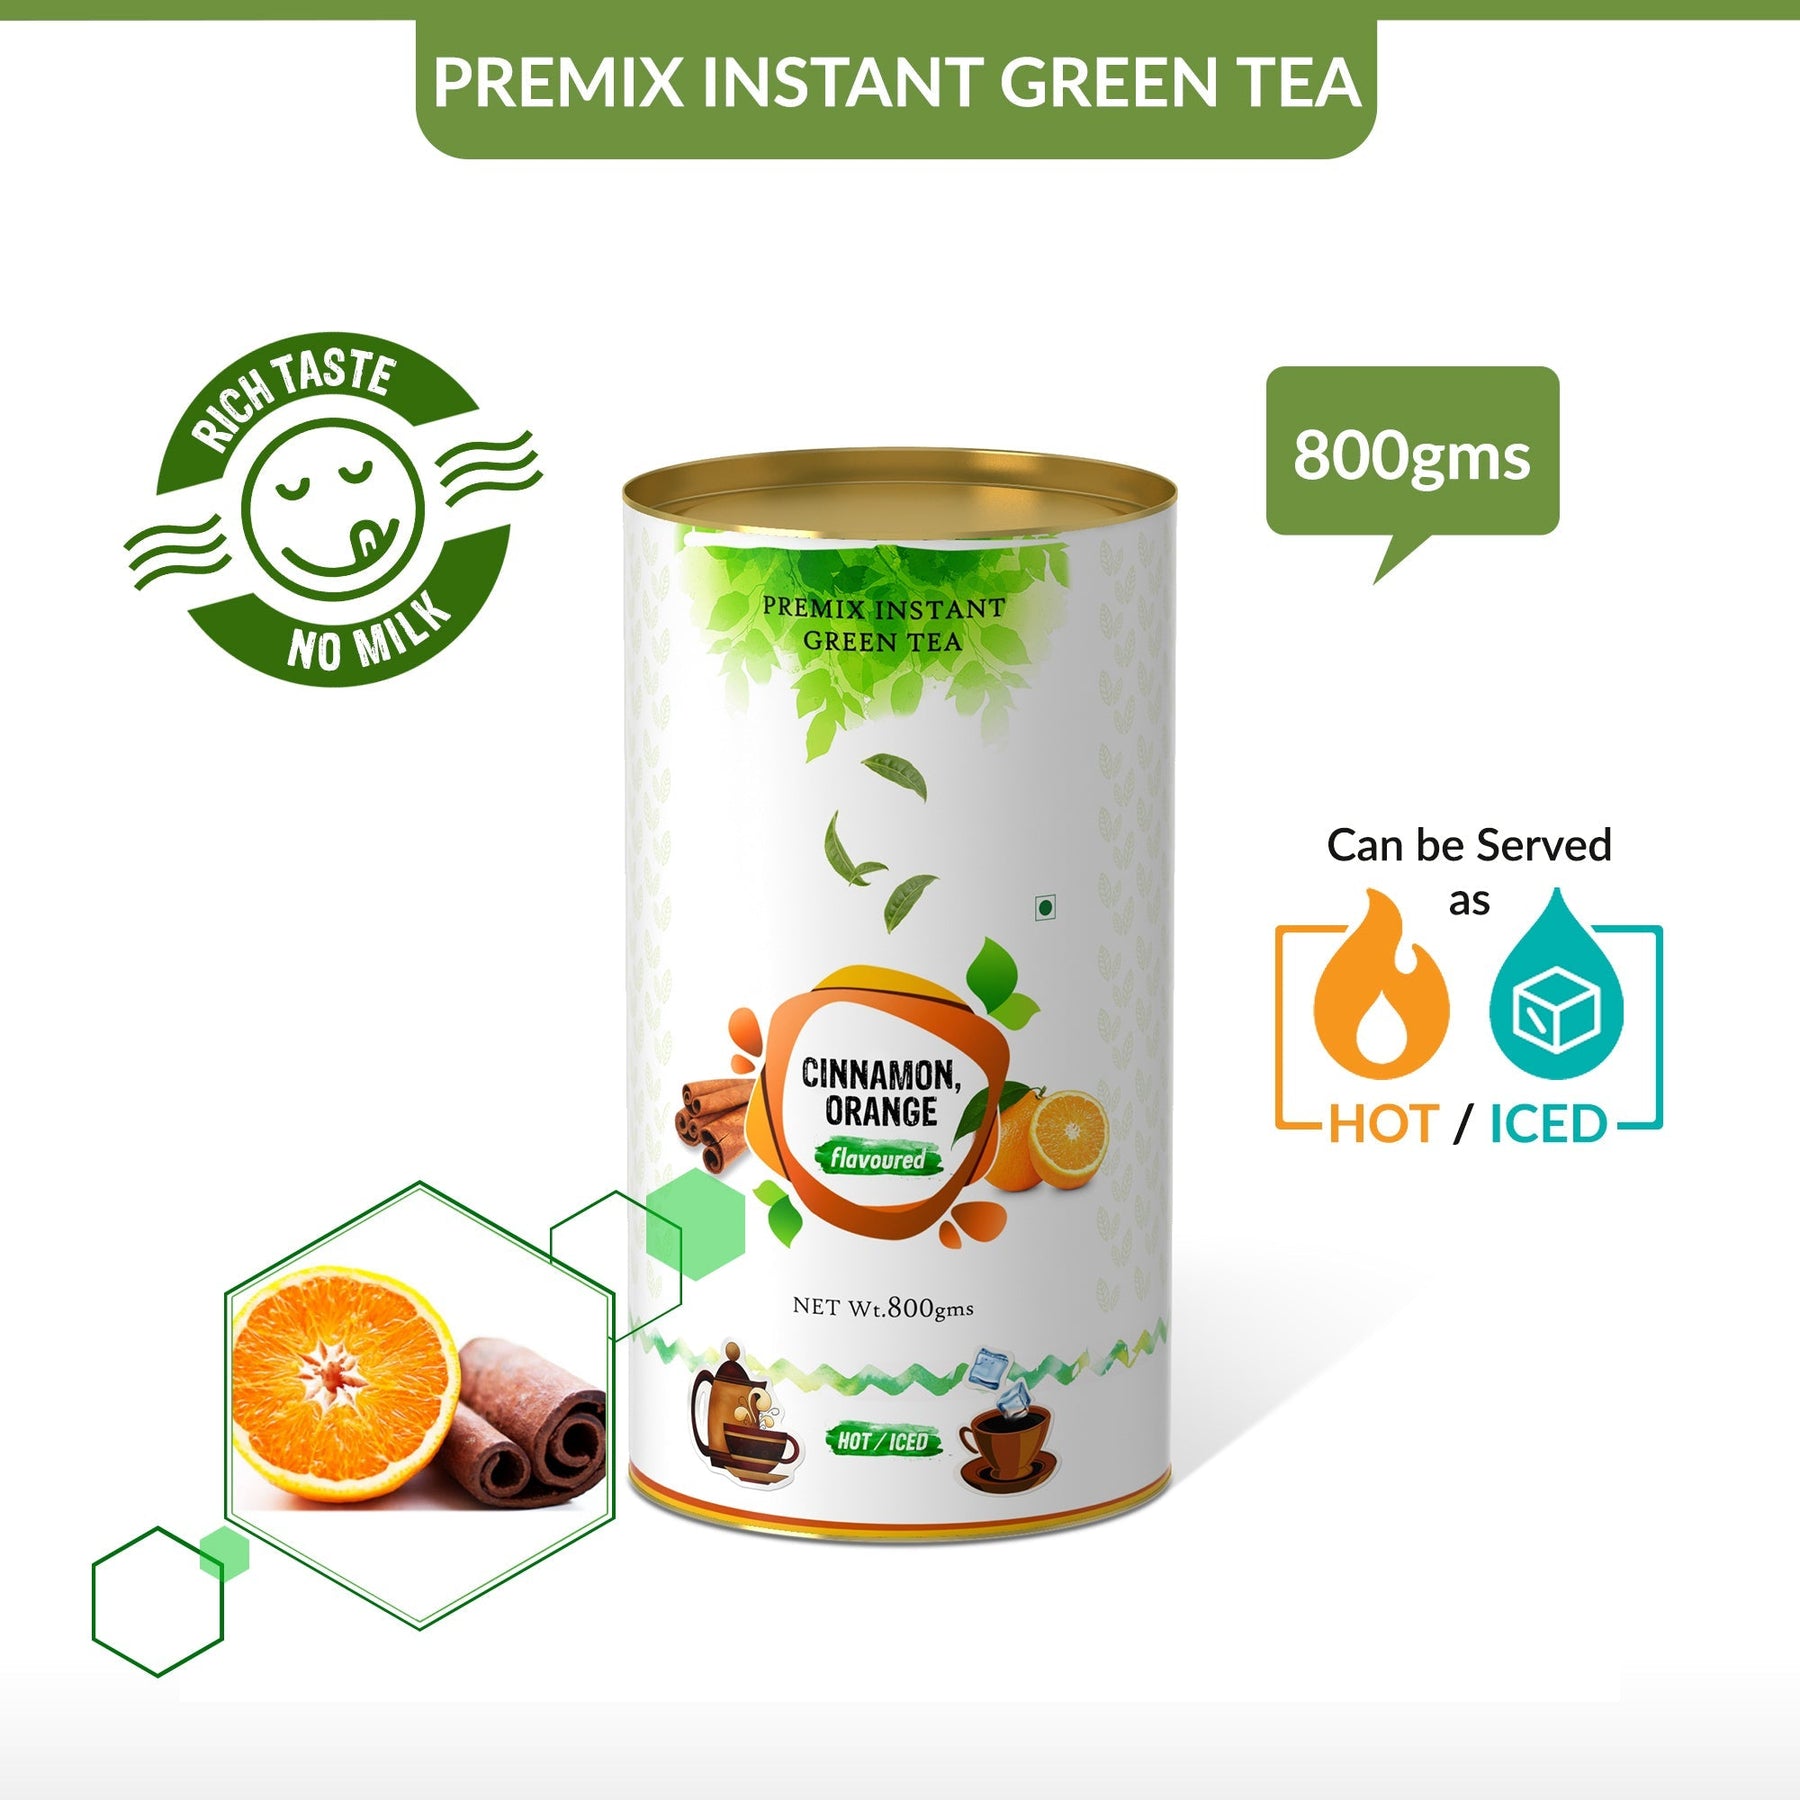 Cinnamon Orange Flavored Instant Green Tea - 800 gms